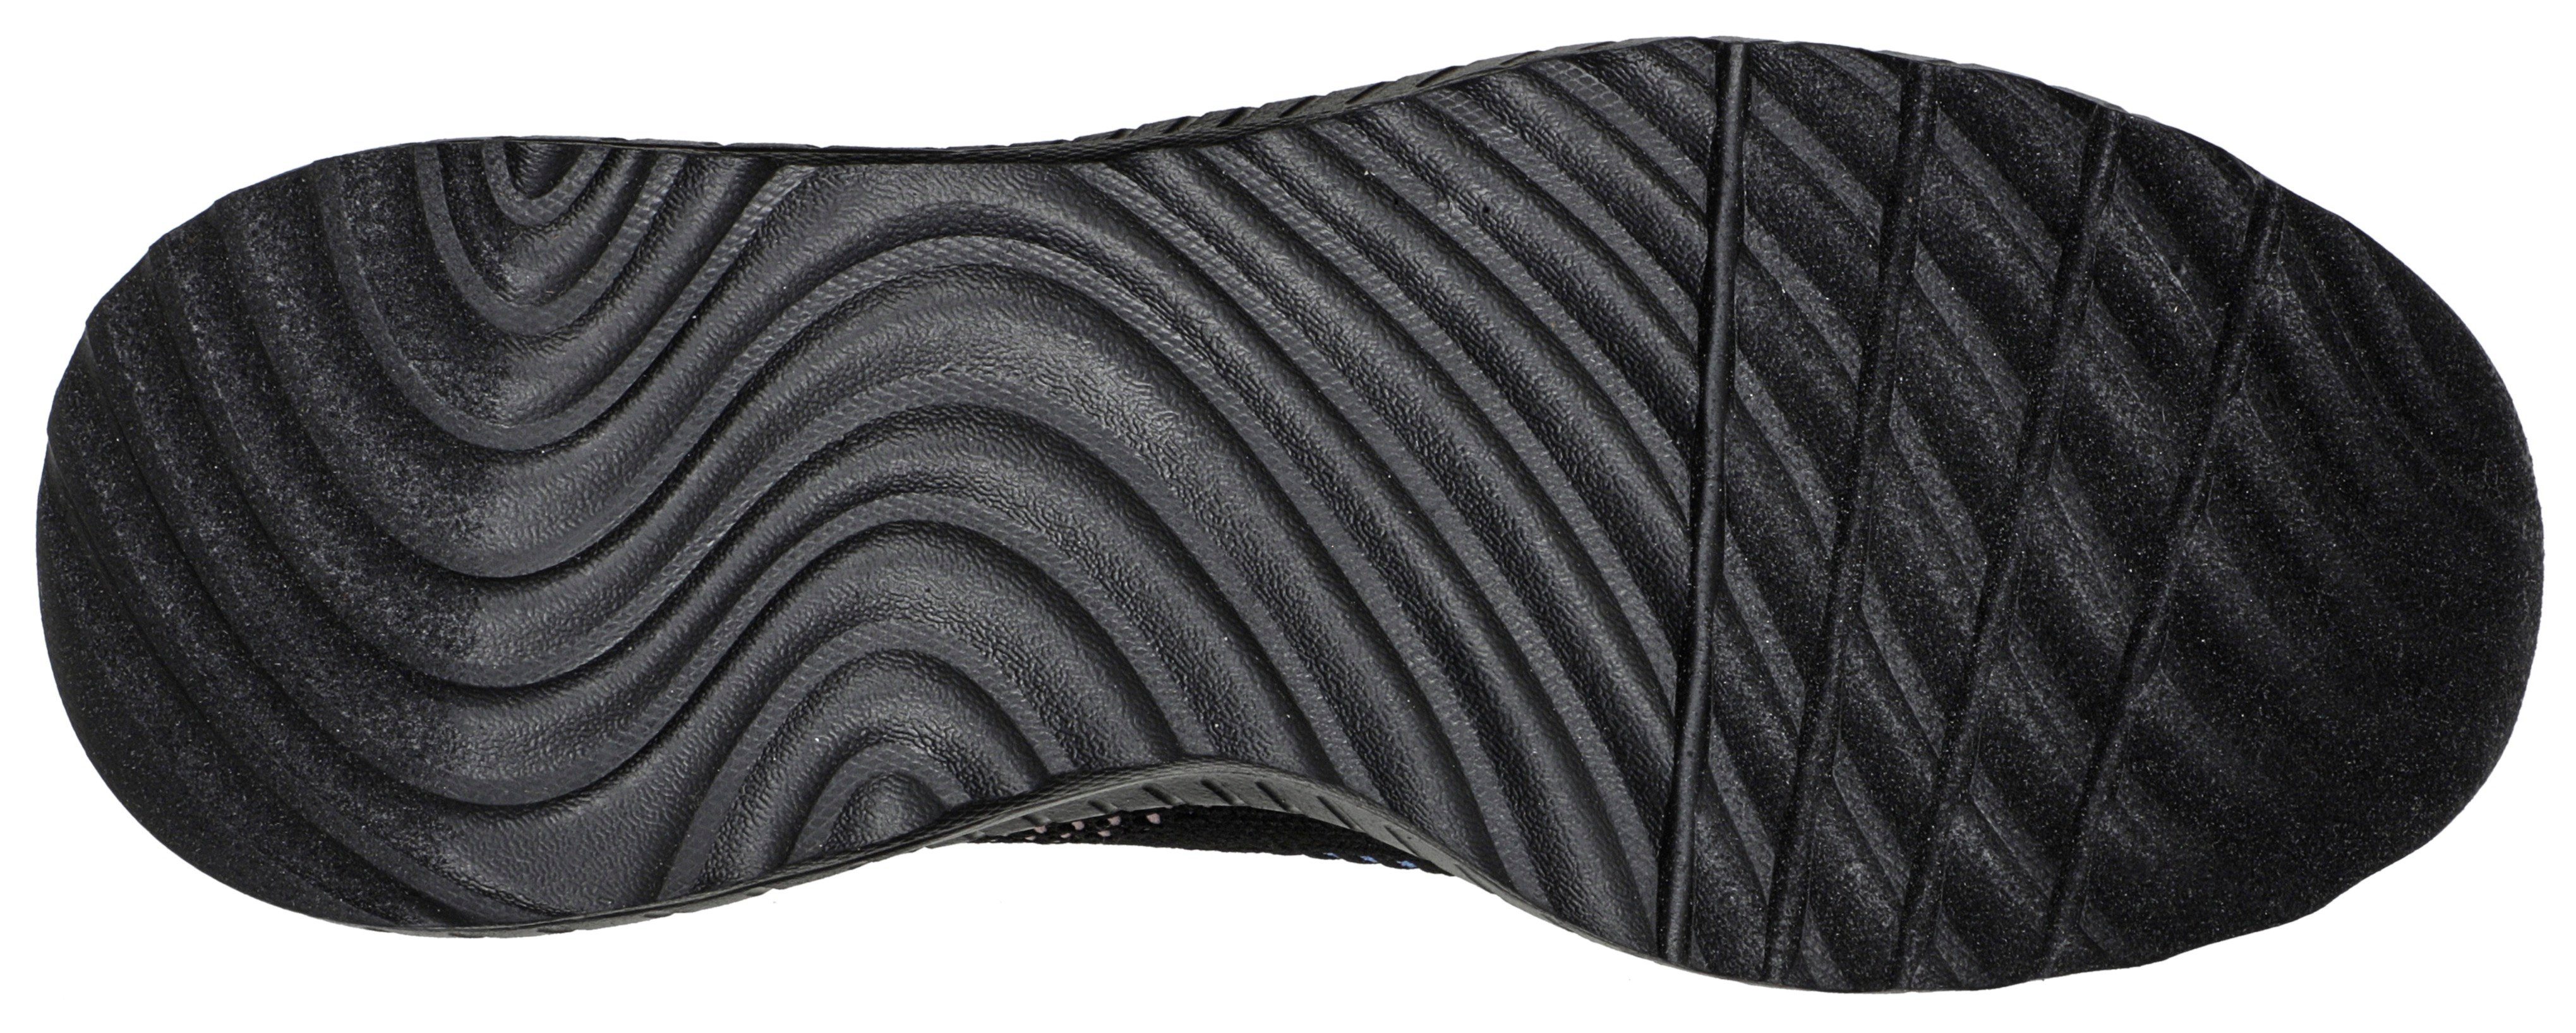 COLOR schwarz-kombiniert Skechers Farbkombi CRUSH in Sneaker CHAOS BOBS toller SQUAD